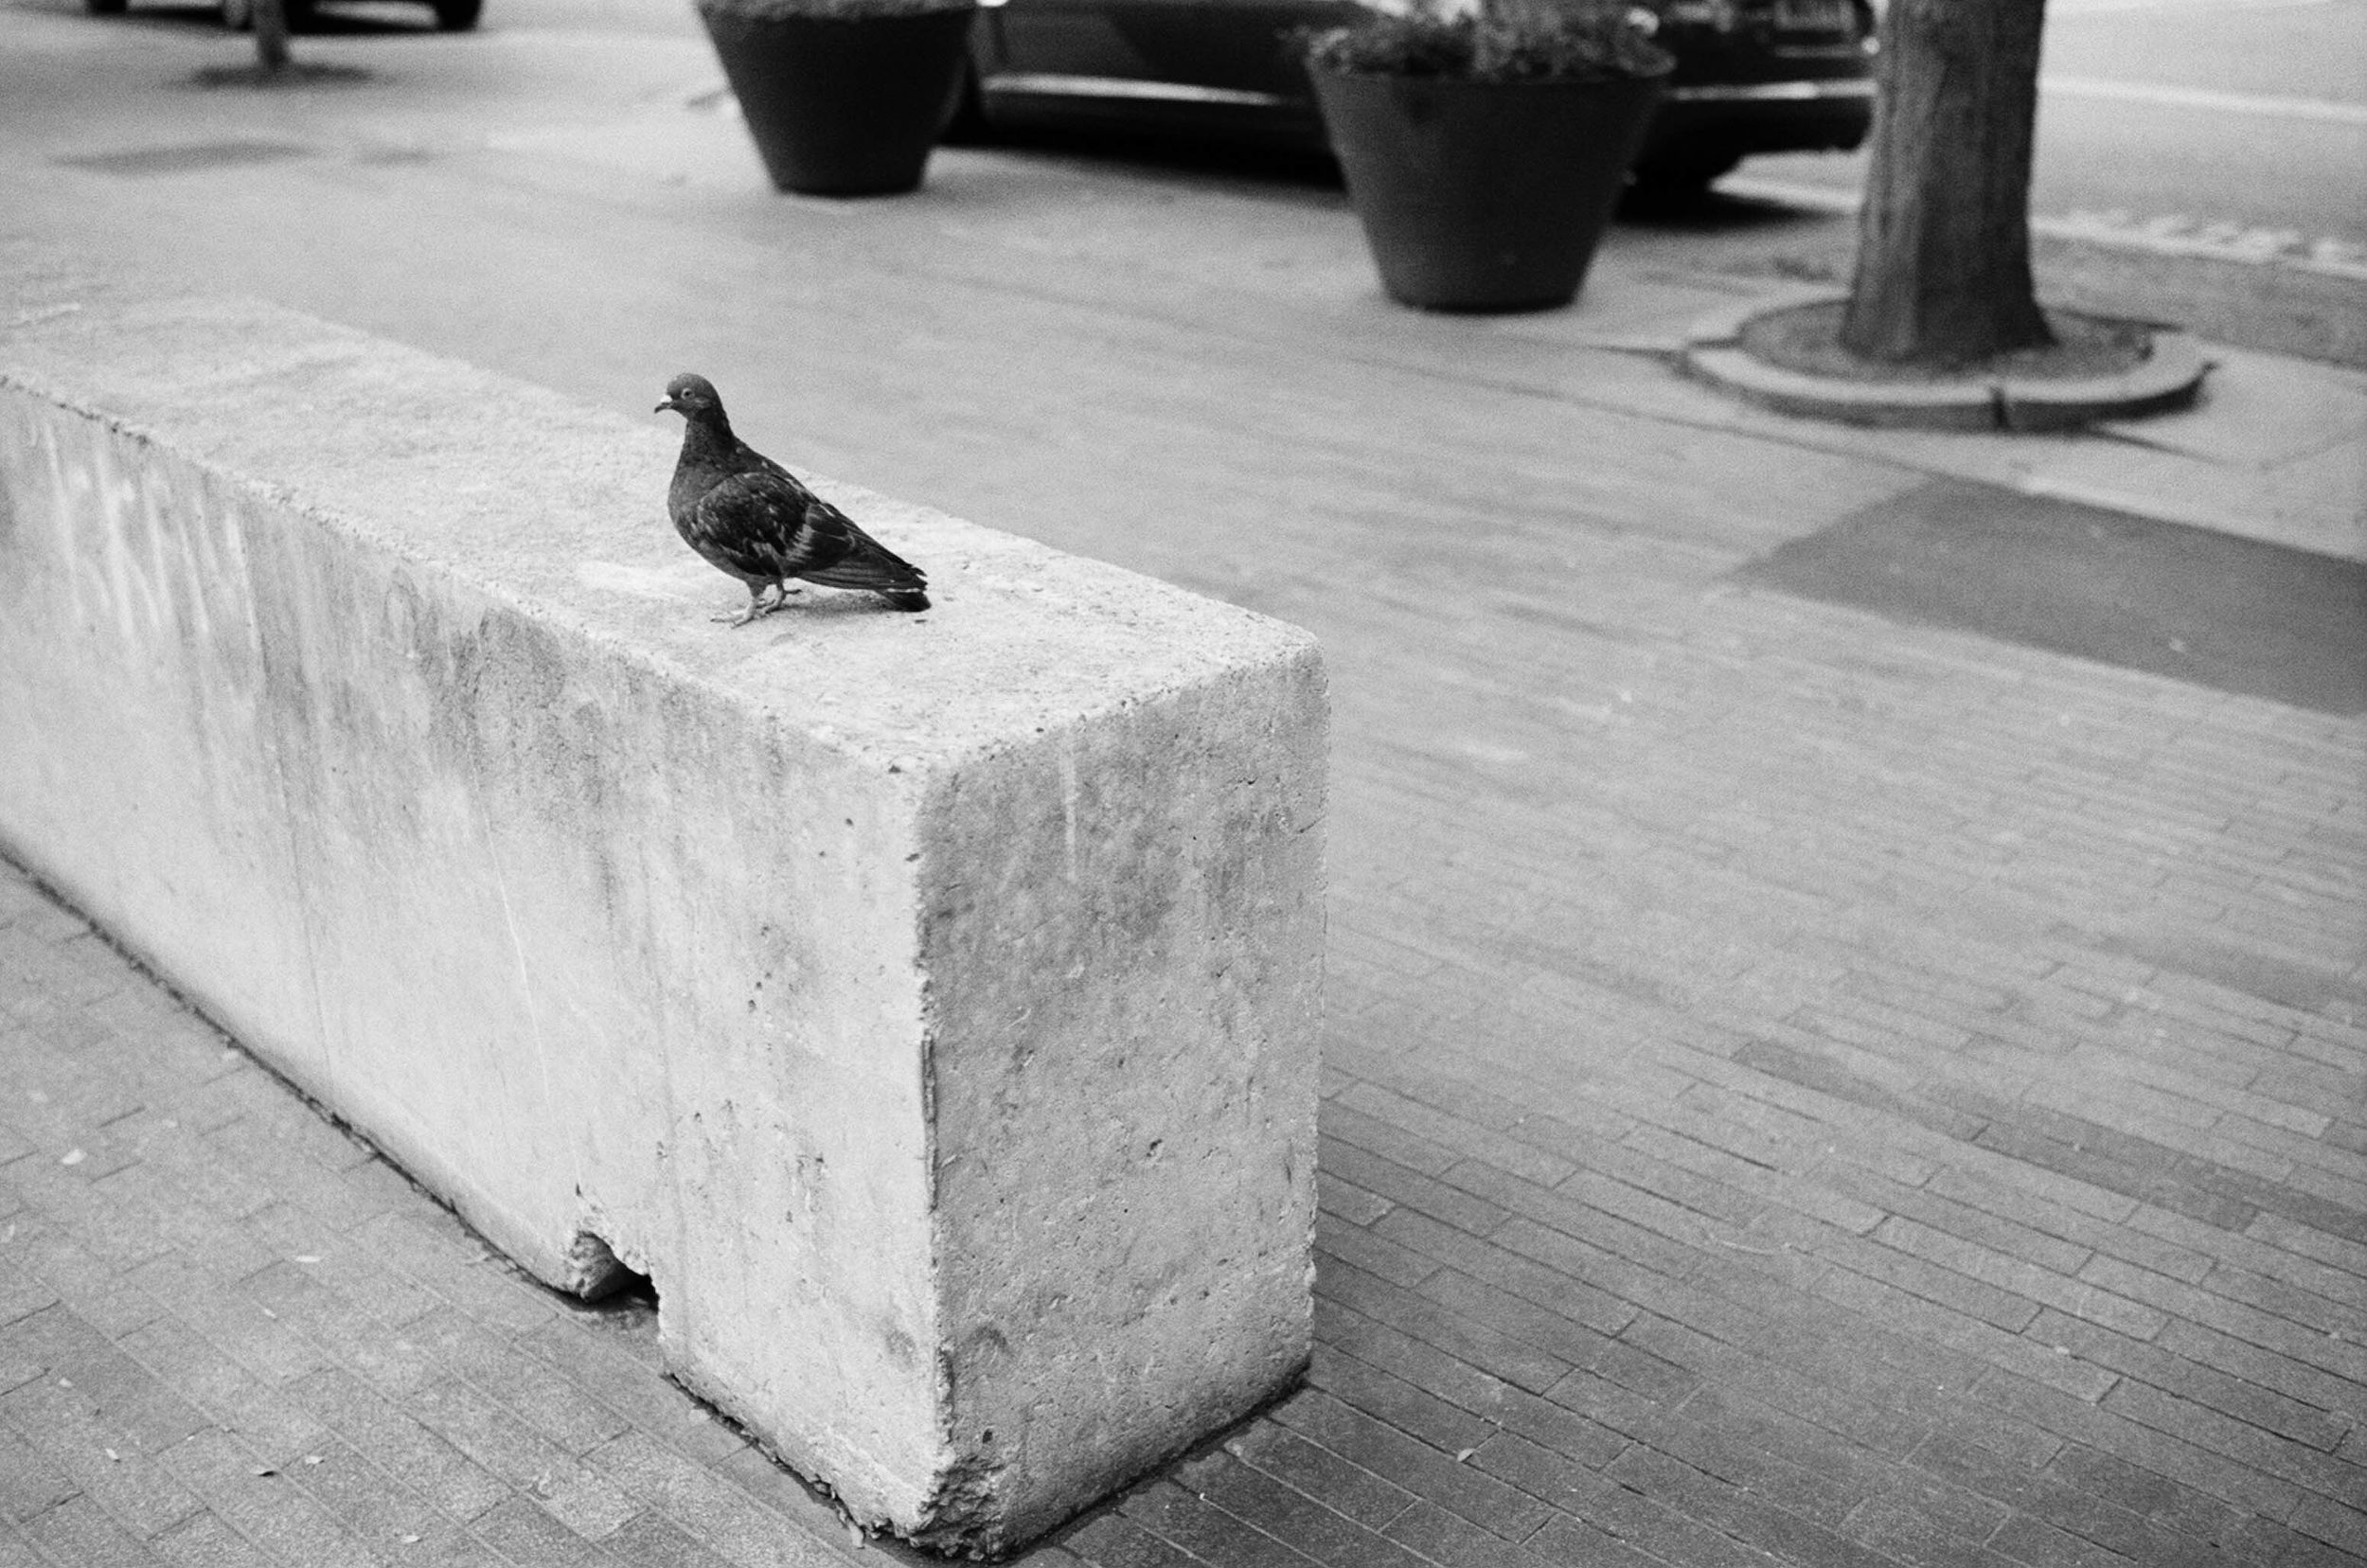 A pigeon sitting on a concrete bollard.